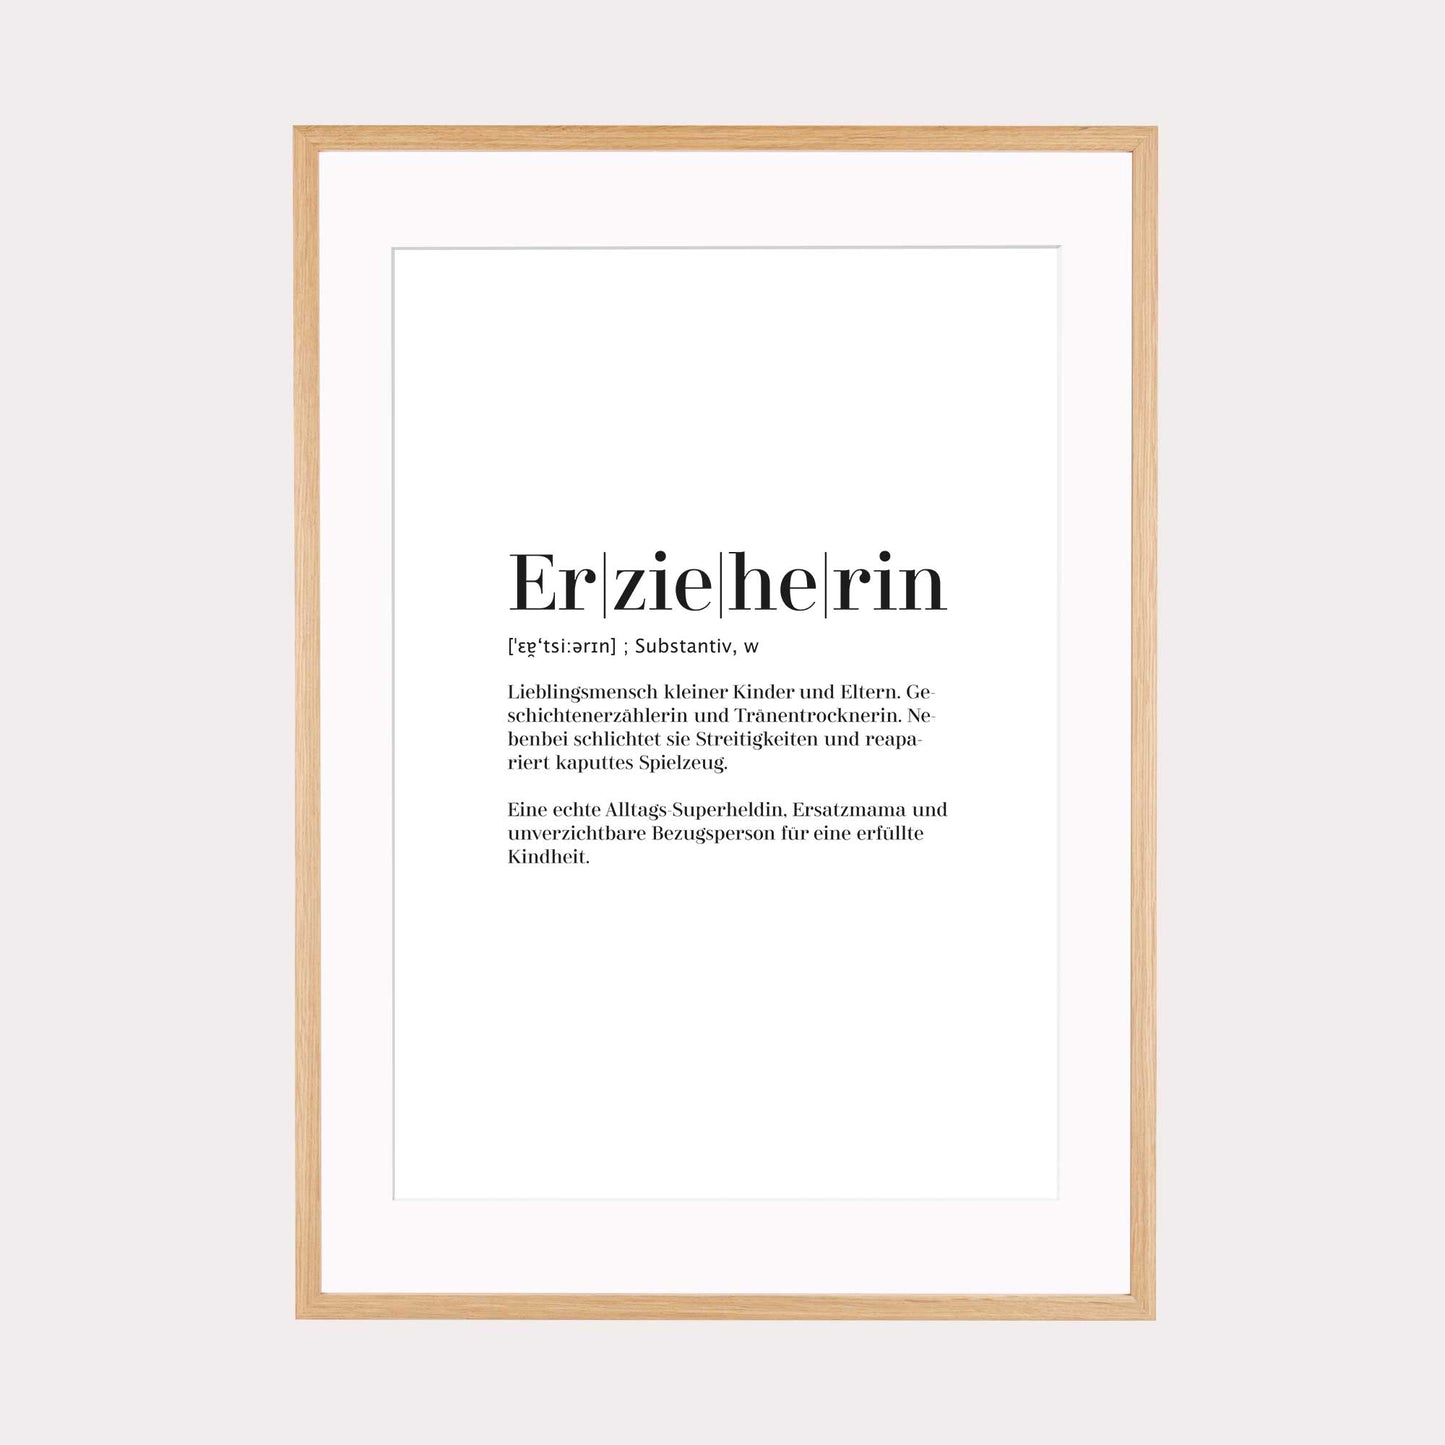 Art Print | Erzierherin - Worterklärung Definition à la Duden